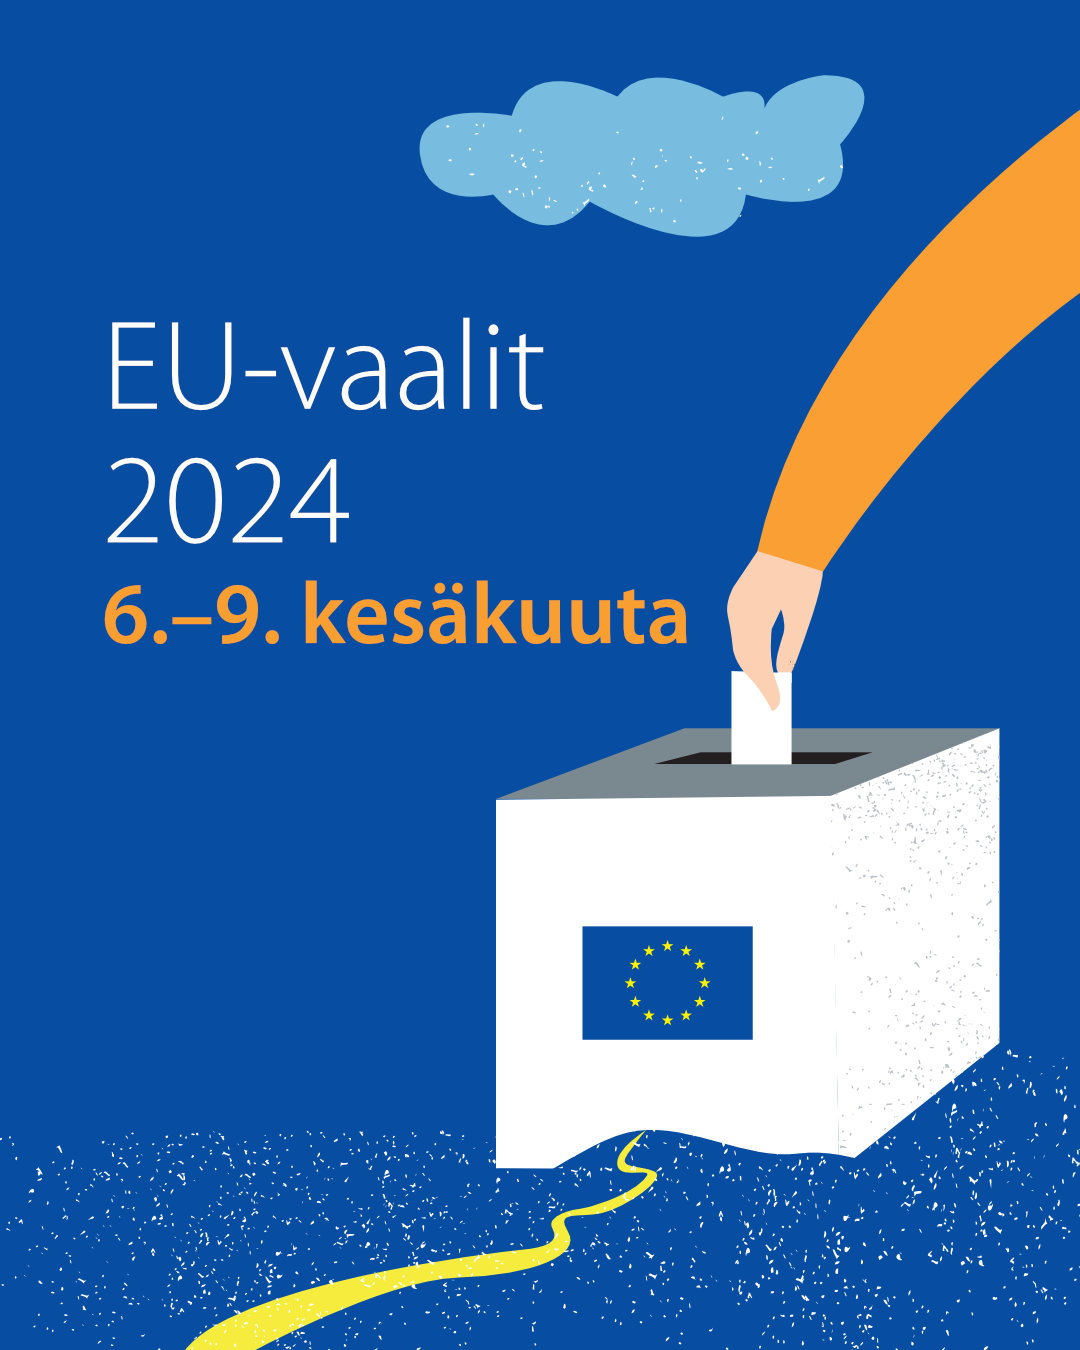 EU-vaalit 2024 - 4:5.jpg